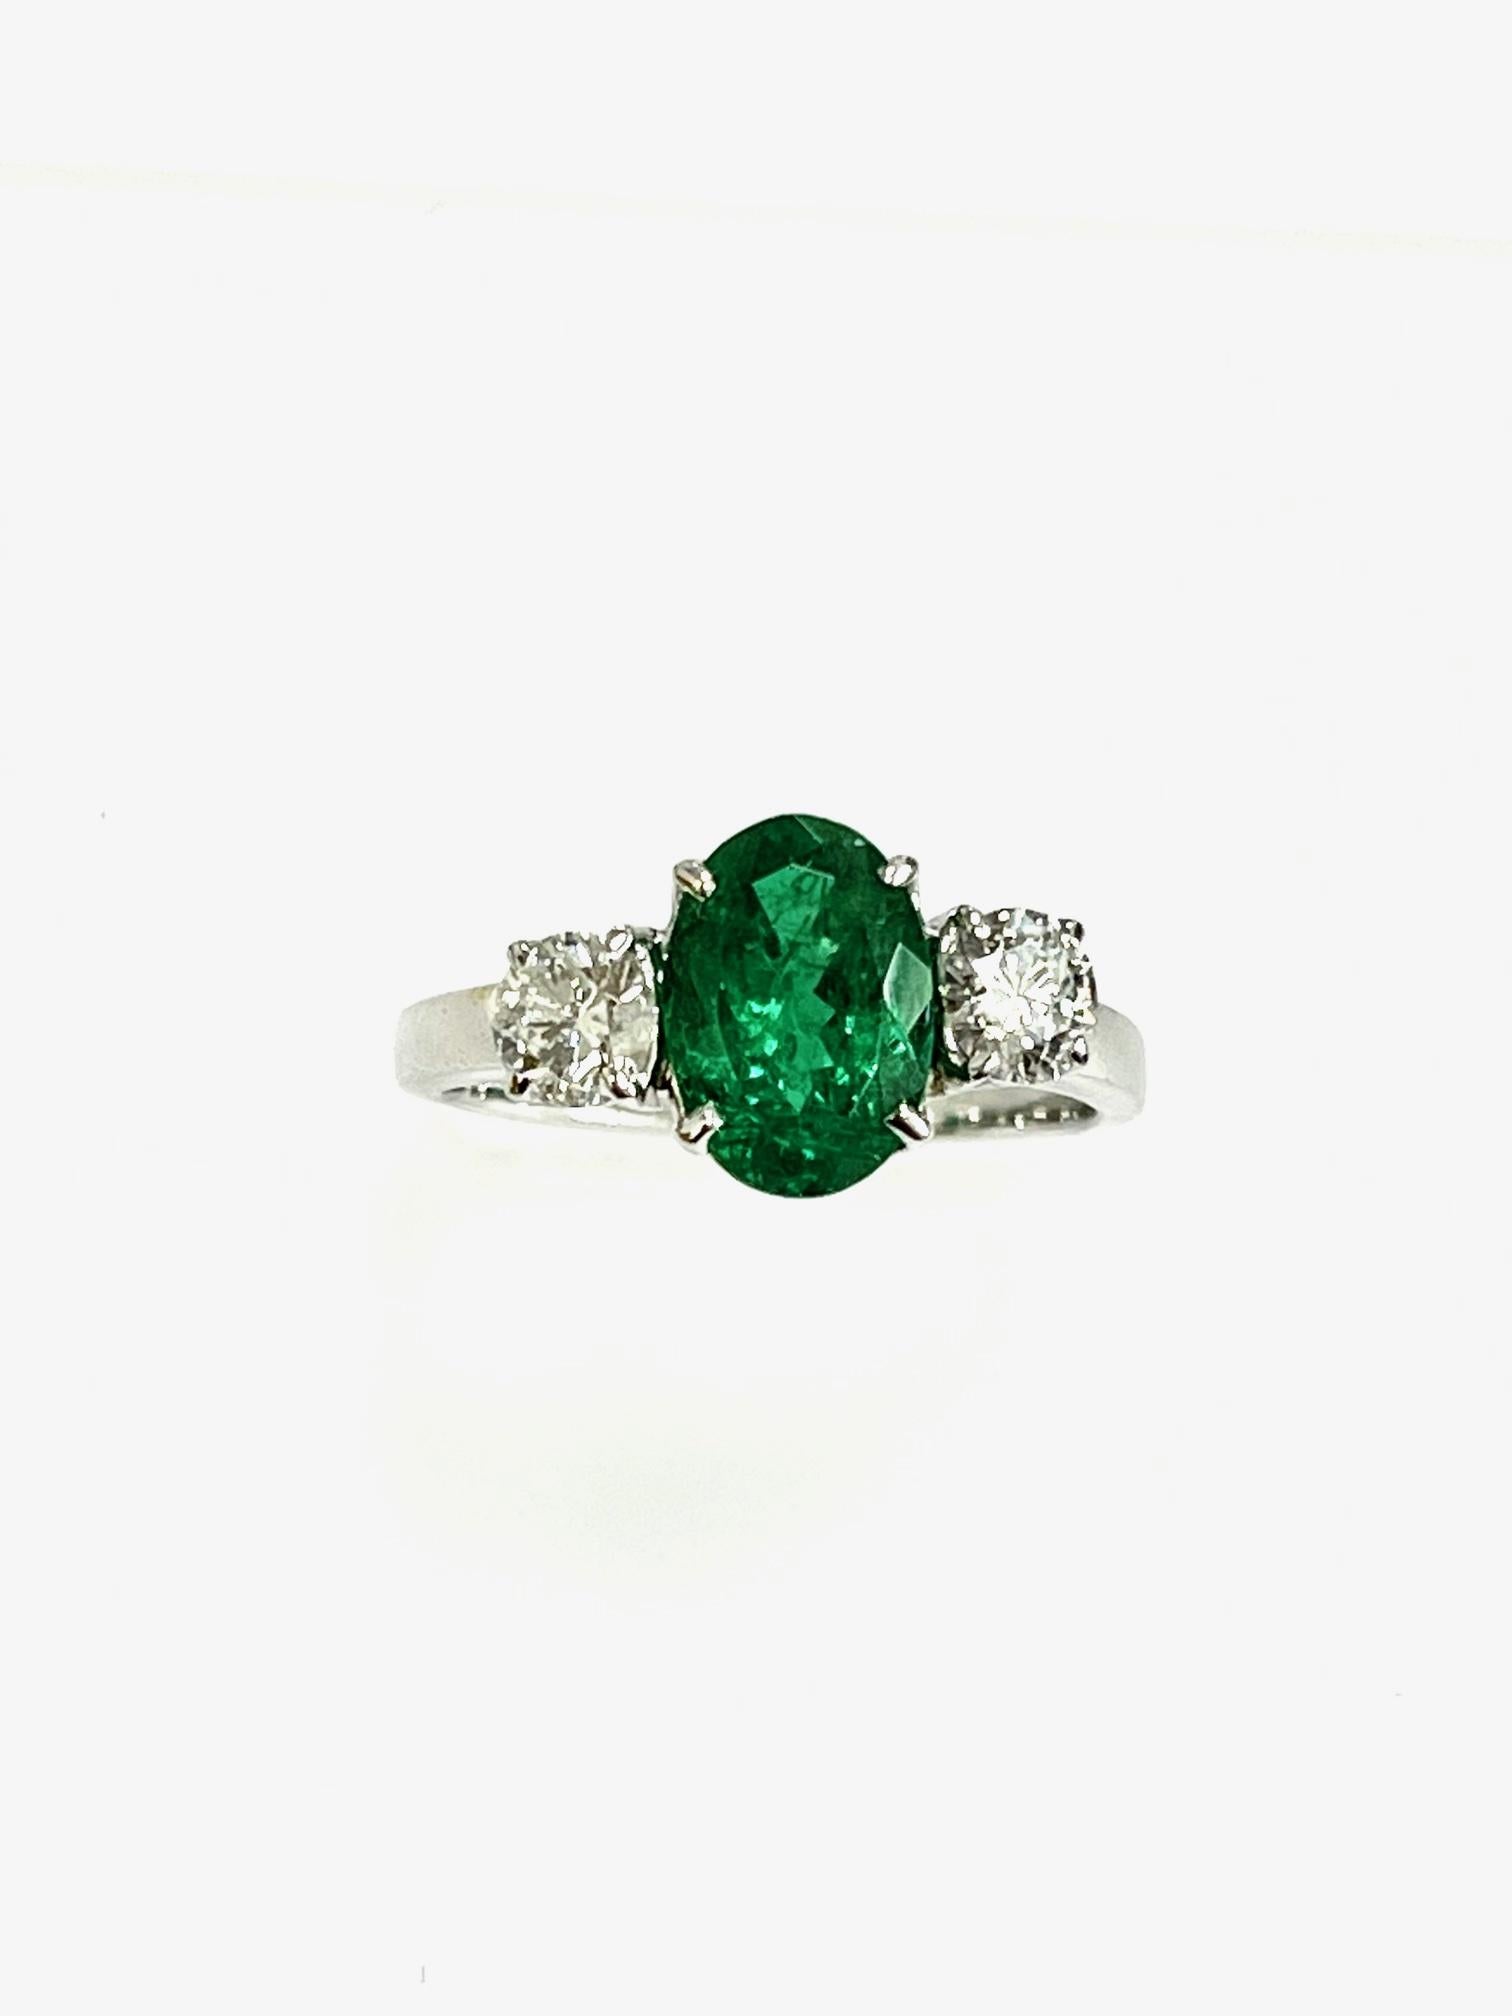 1.40 Carat Oval shape Zambian emerald set in 18k white ring with diamonds 